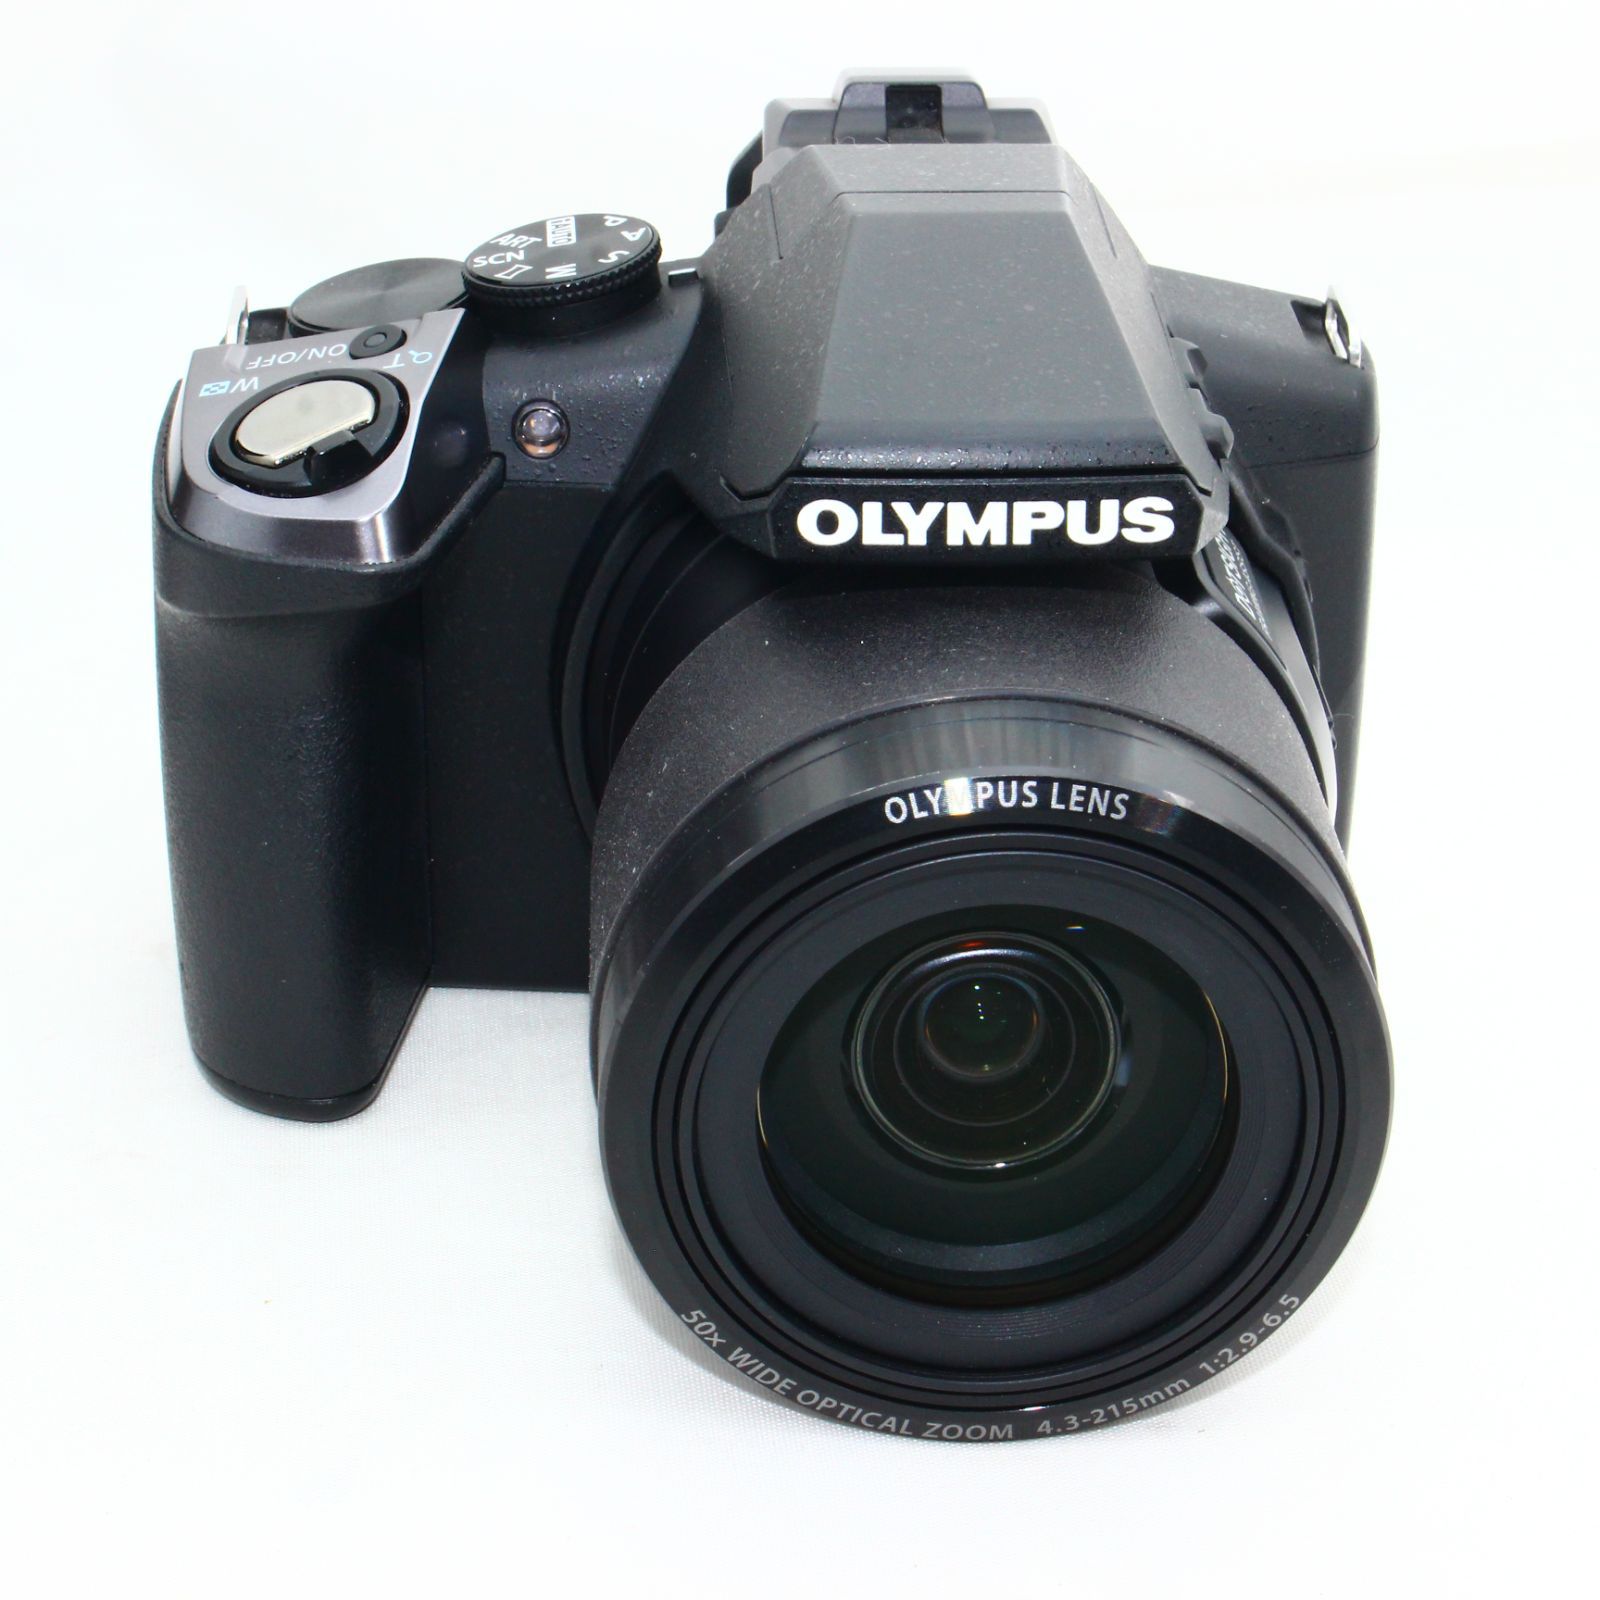 OLYMPUS 超望遠デジタルカメラ STYLUS SP-100EE コンデジ - デジタルカメラ